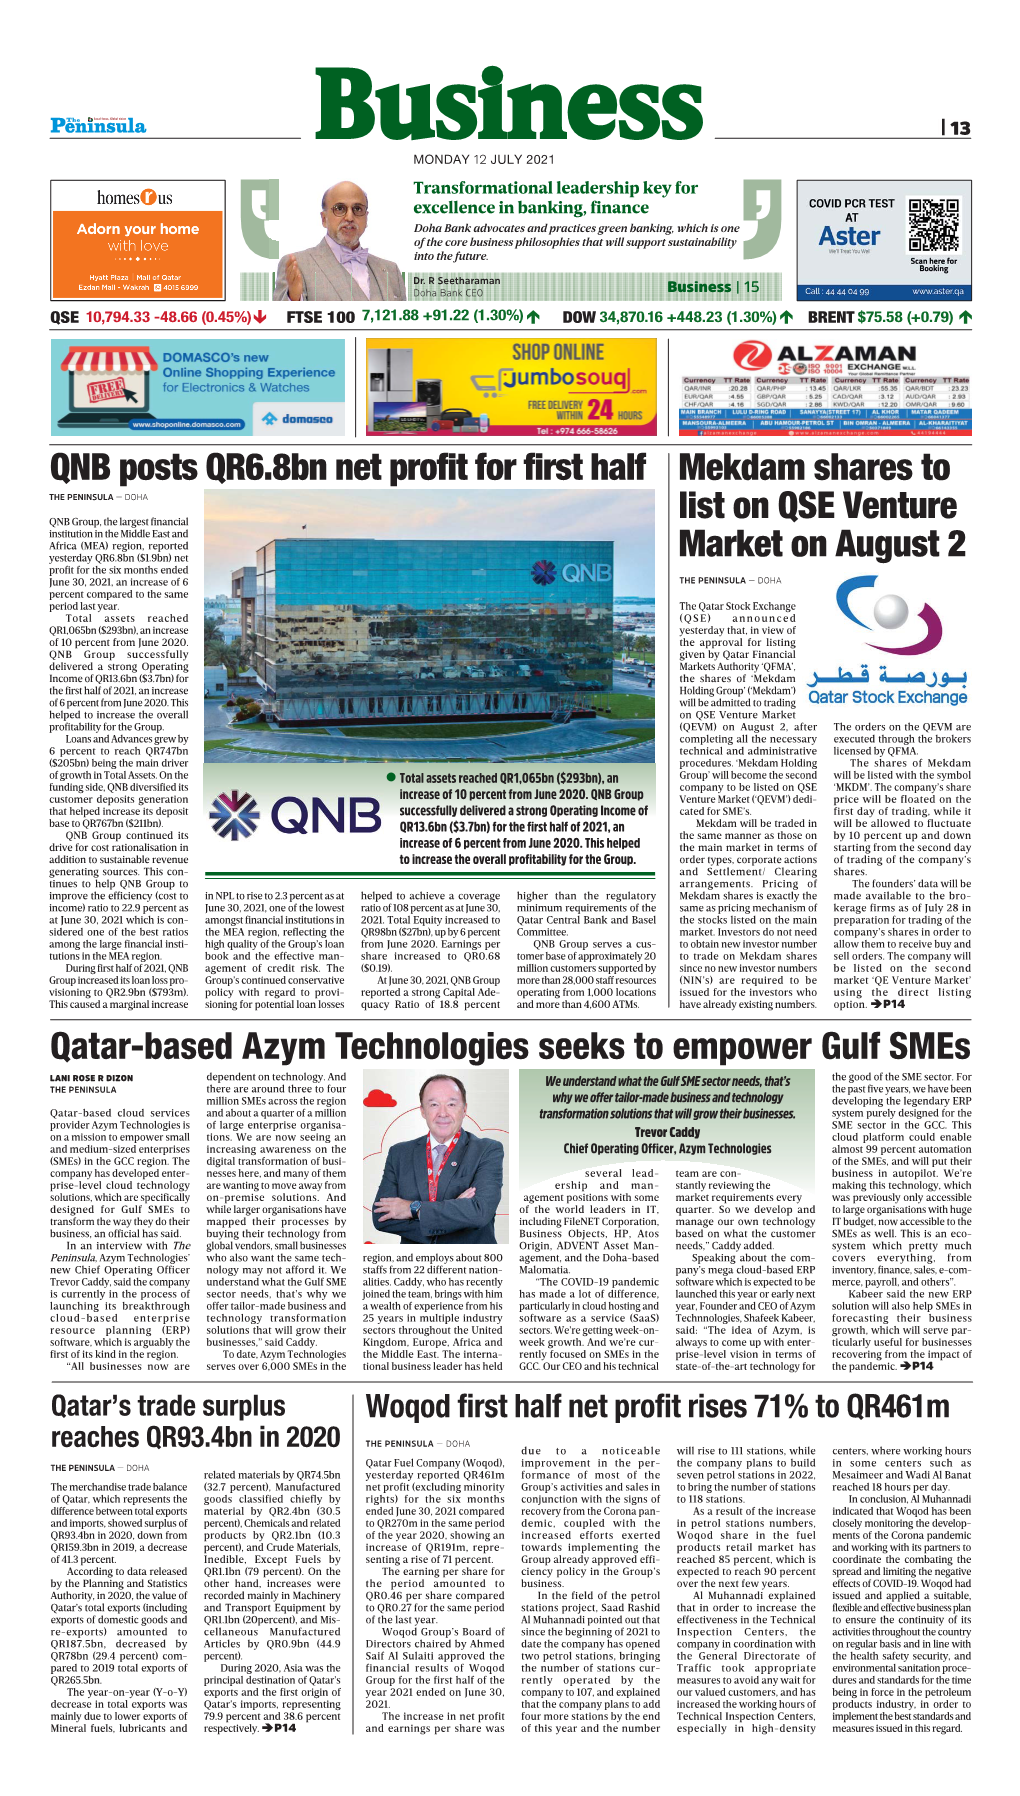 QNB Posts QR6.8Bn Net Profit for First Half Mekdam Shares to List on QSE